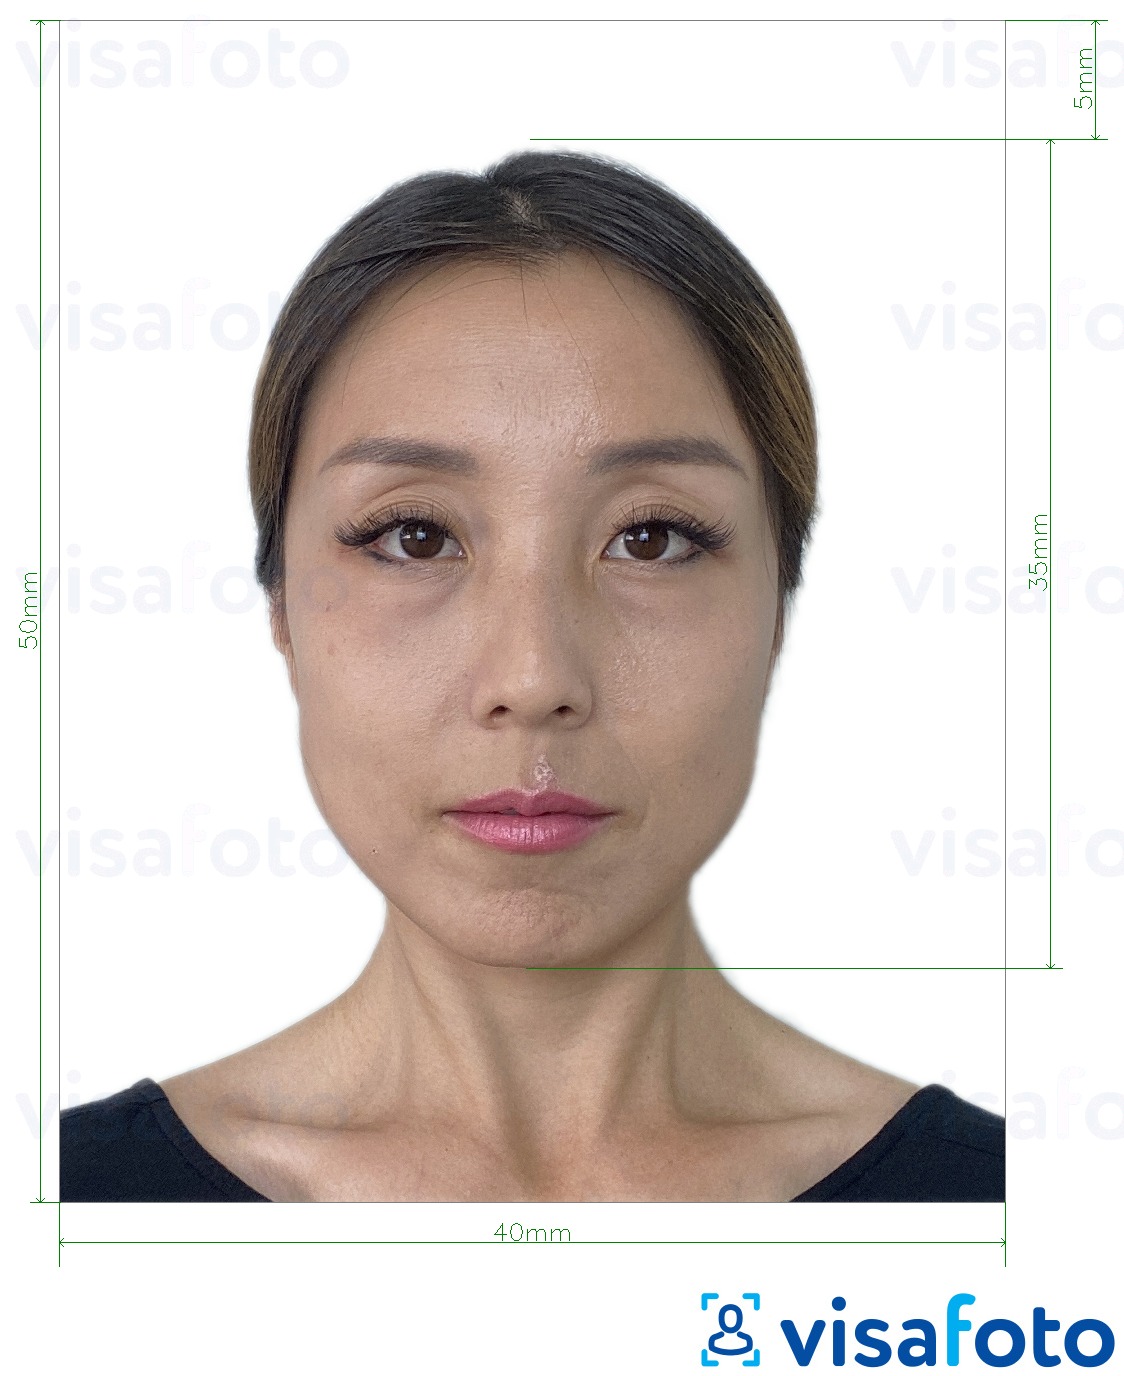 Primjer fotografije za Hong Kong osobna iskaznica 4x5 cm s točno određenom veličinom